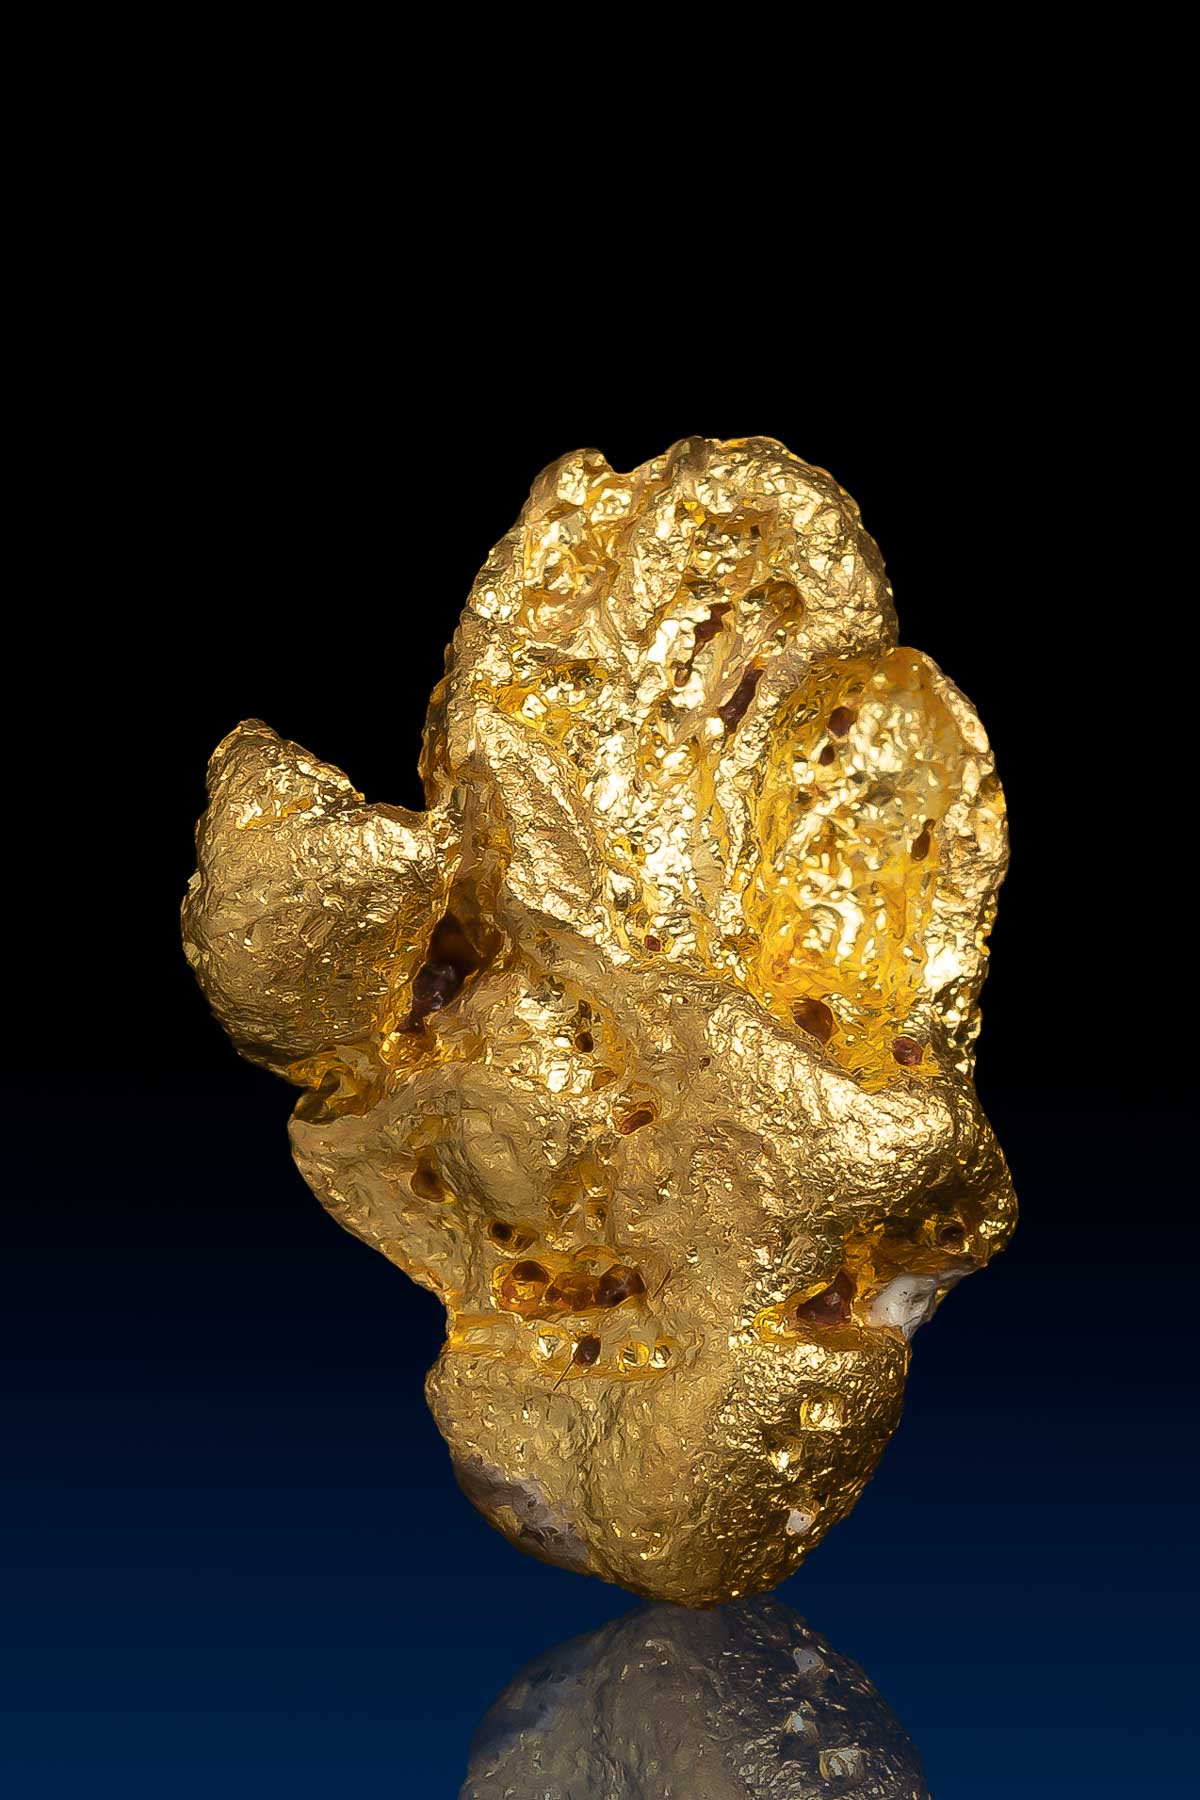 Chunky "Catcher's Mitt" Shaped Gold Nugget - Alta Floresta, BR